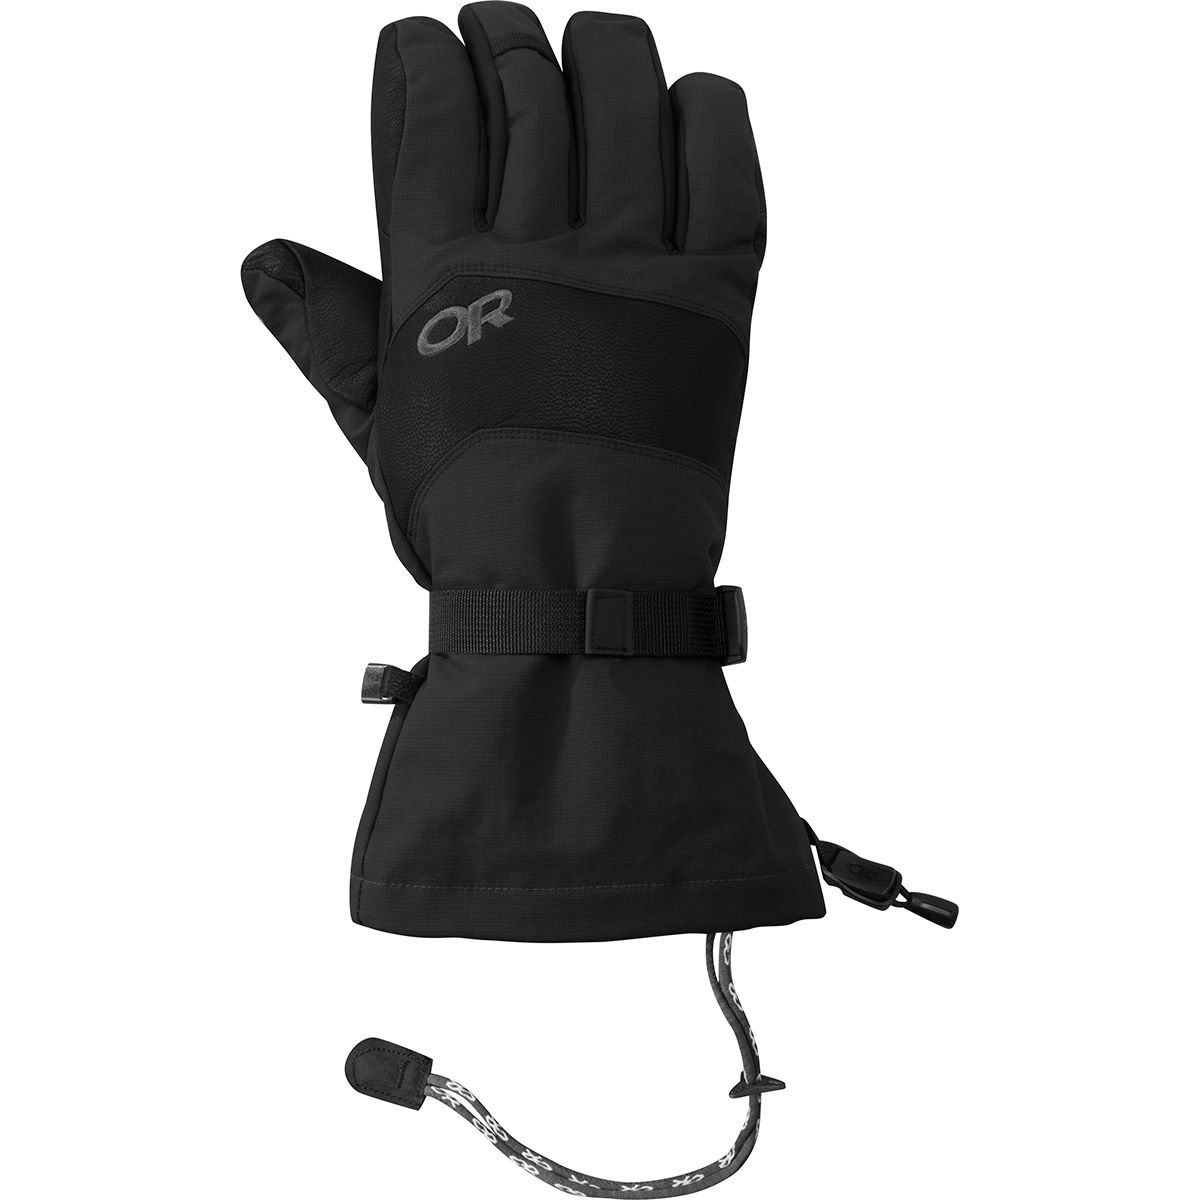 Outdoor Research HighCamp Glove - Men's Black